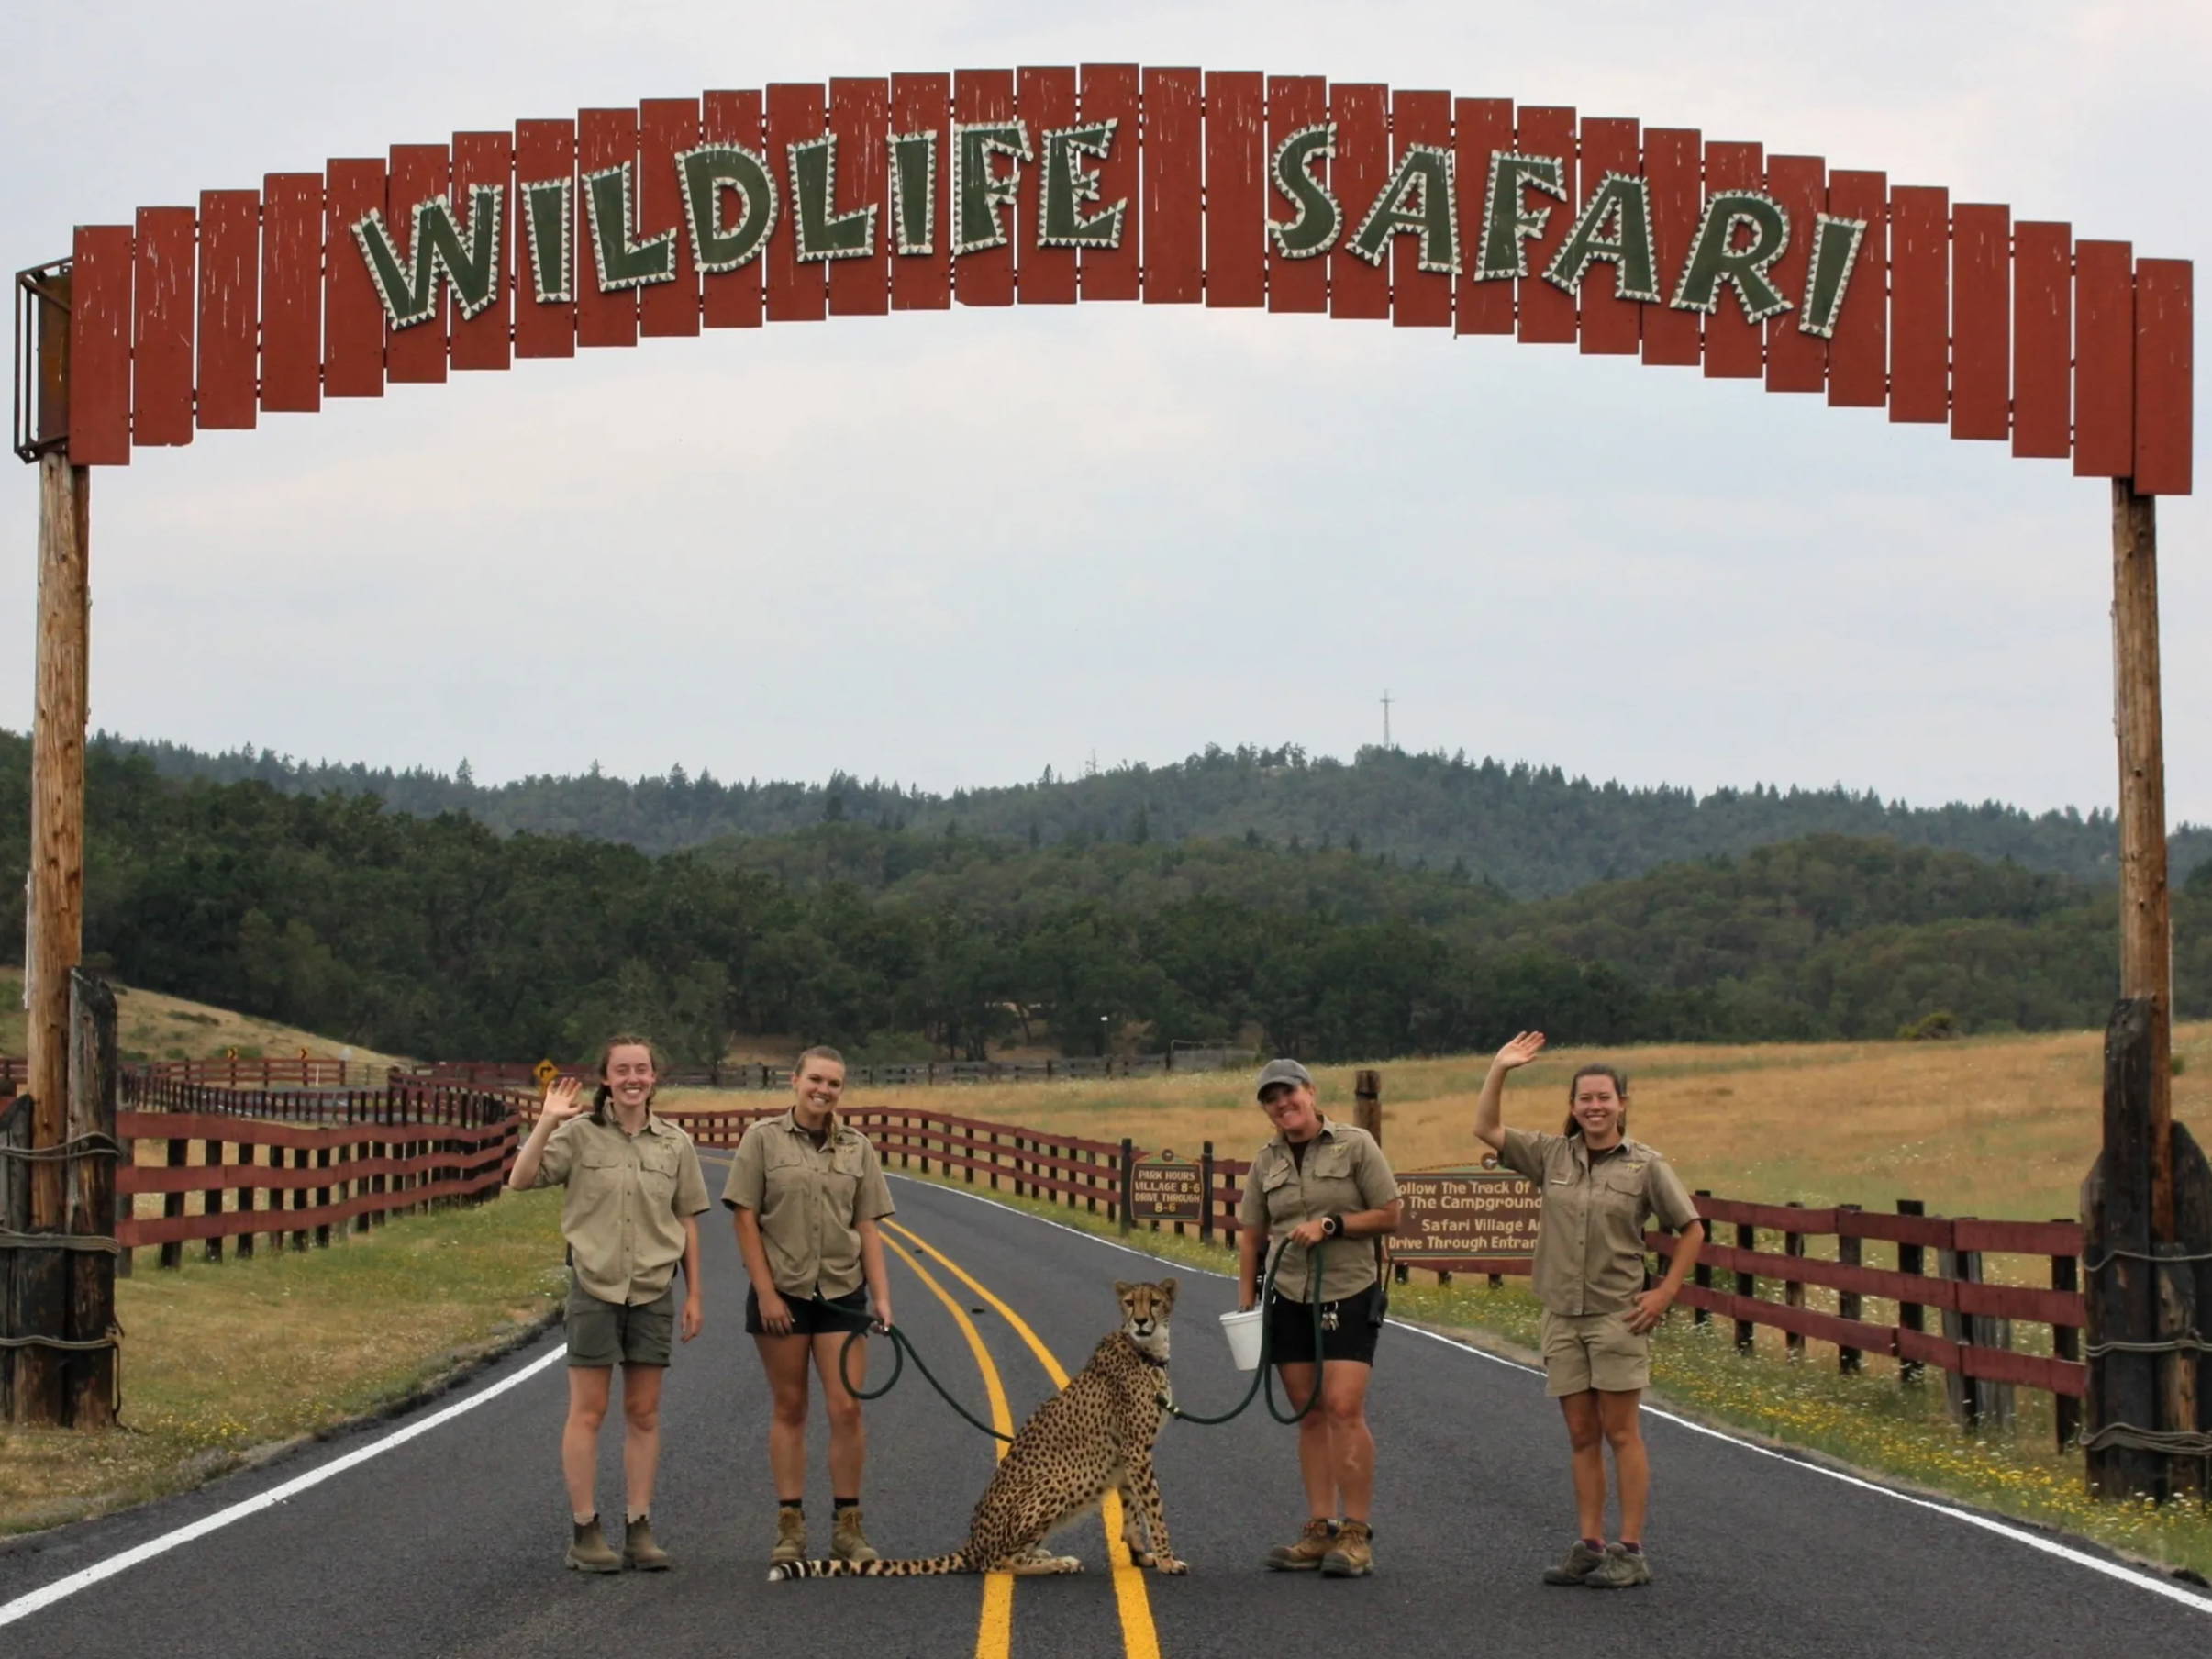 safari club opening hours